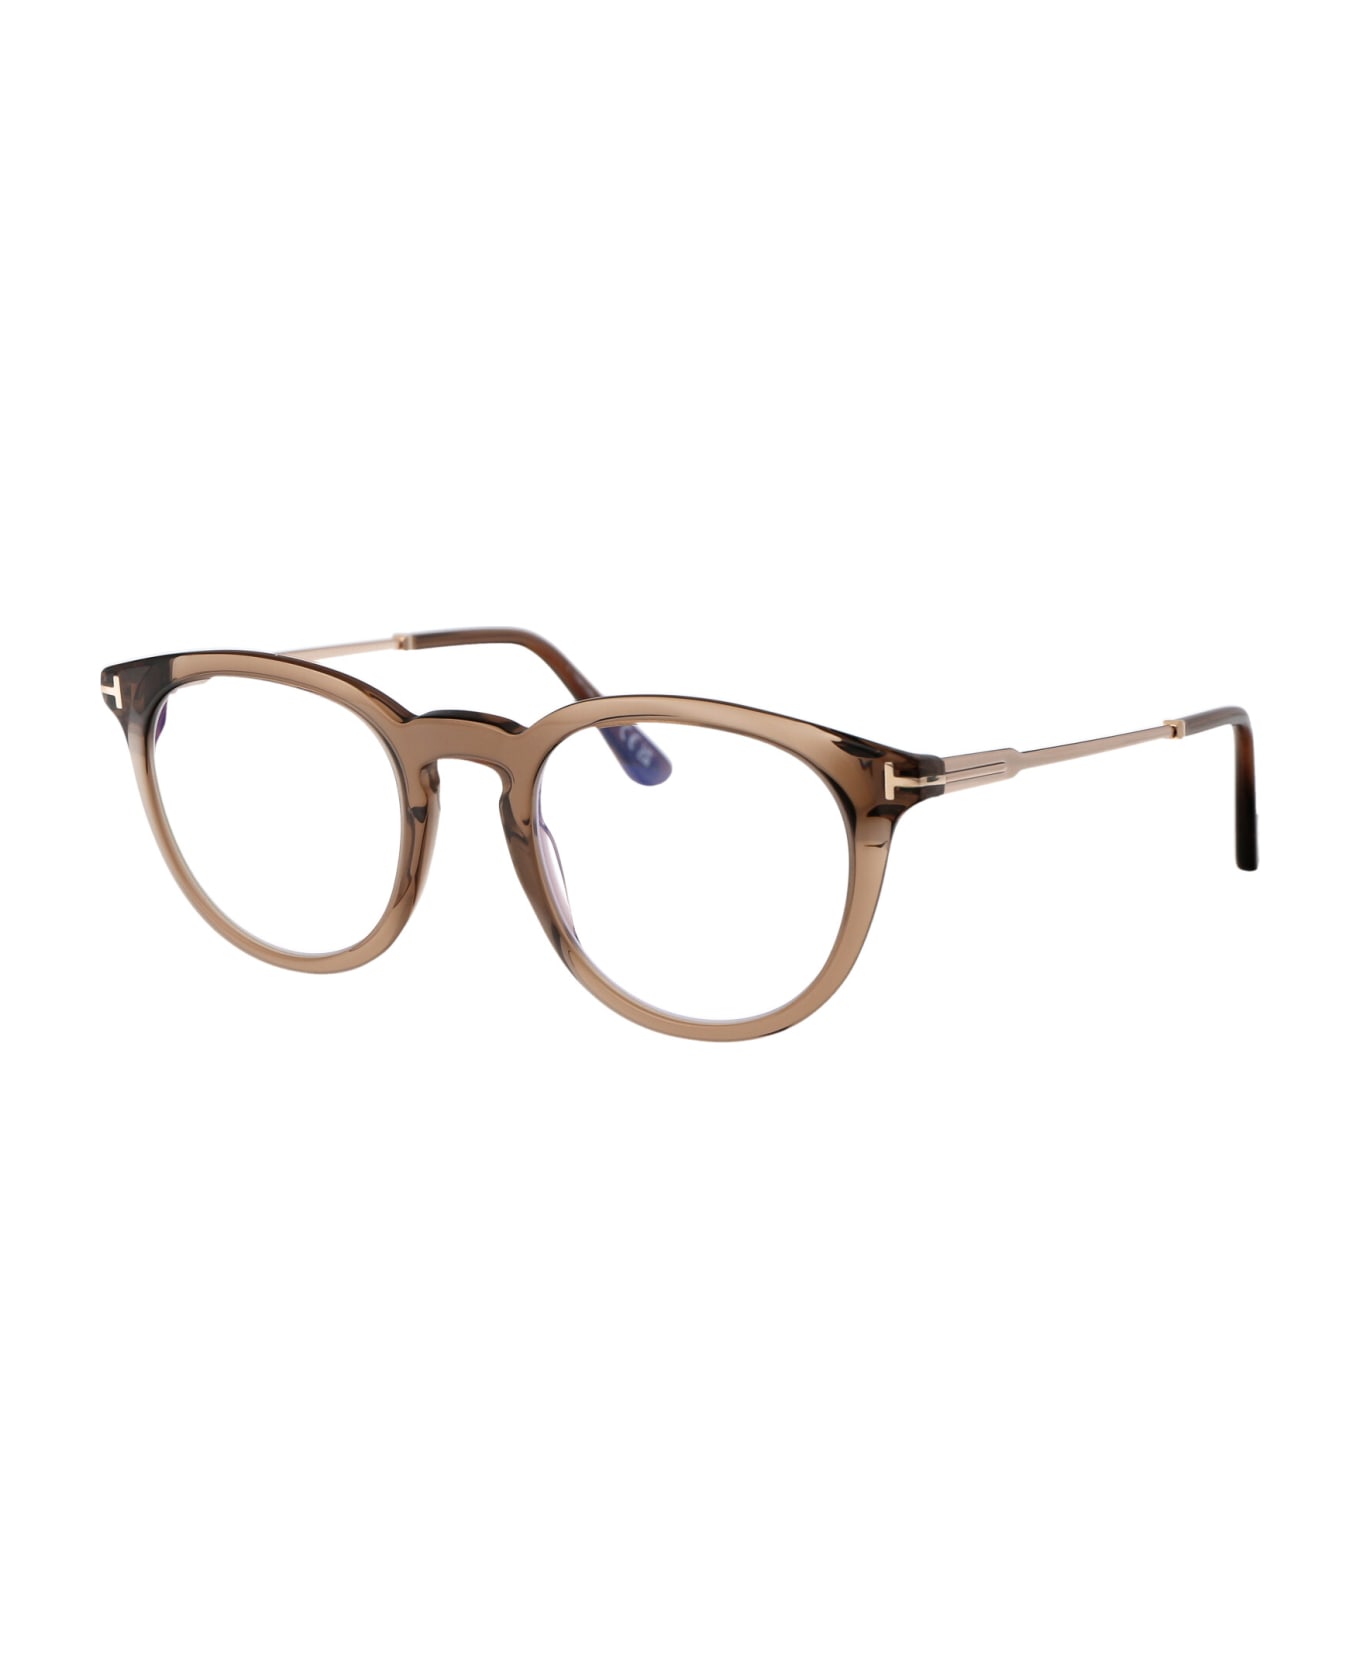 Tom Ford Eyewear Ft5905-b Glasses - 045 Arm Lenght 145 mm, Bridge 21 mm, Fit INTERNATIONAL